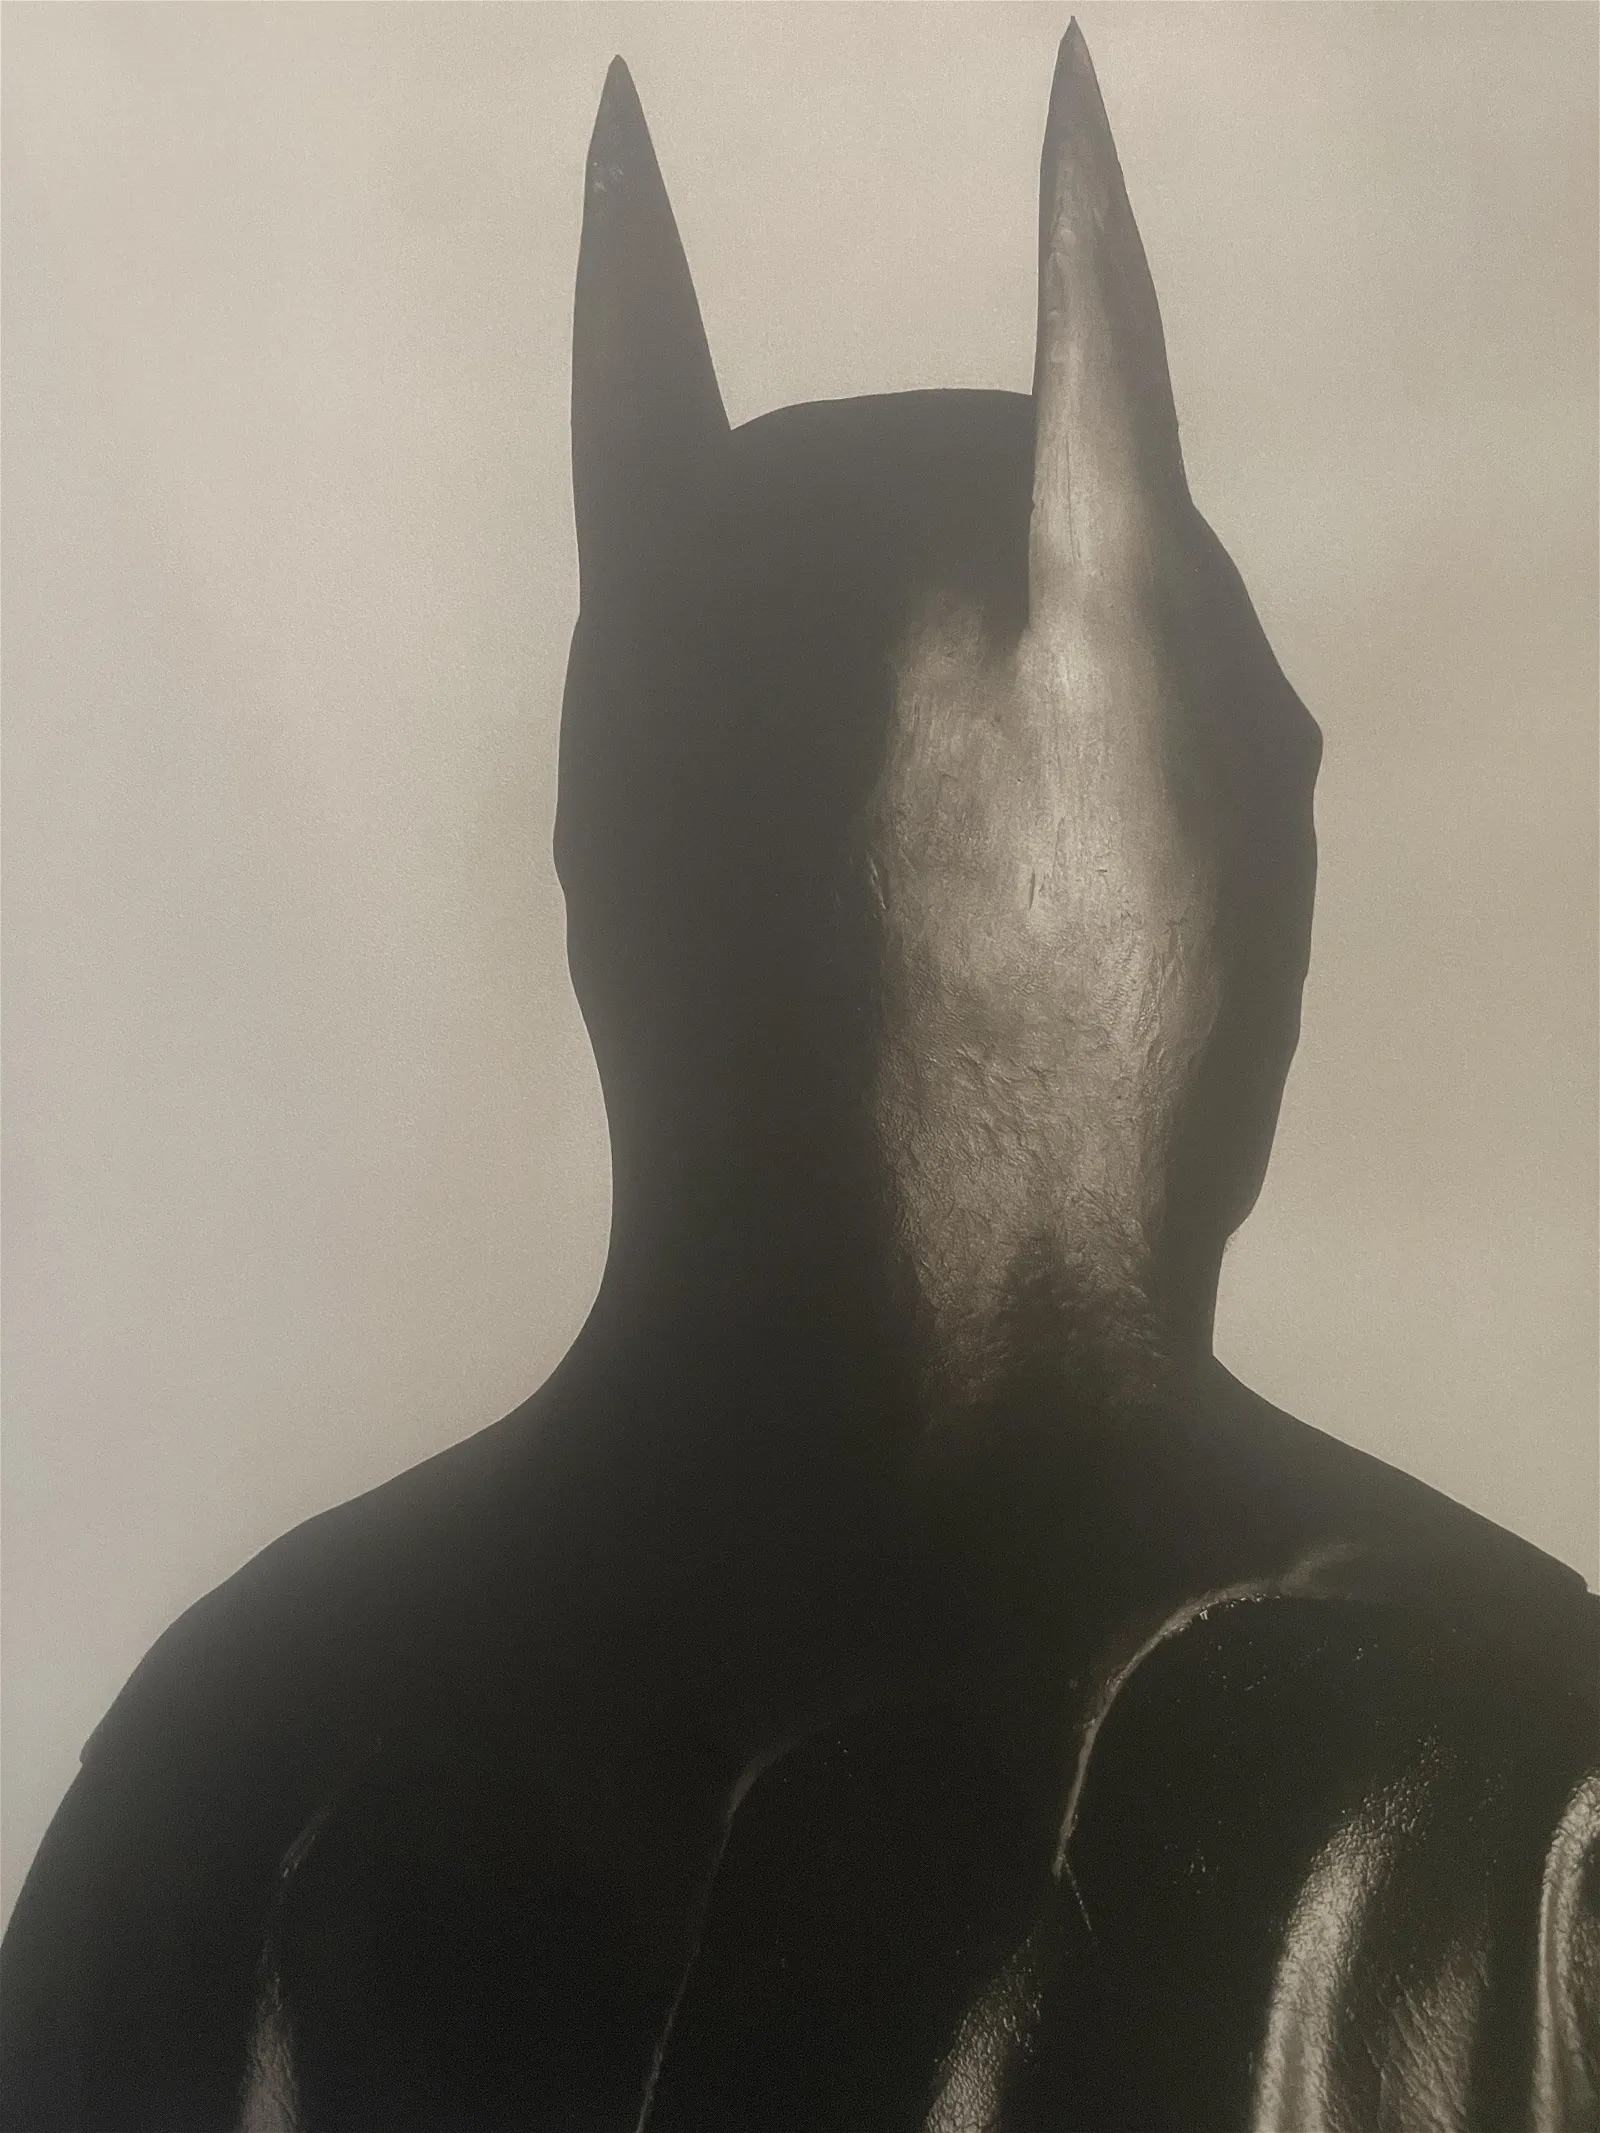 Herb Ritts "Batman, Michael Keaton, London, 1988" Print